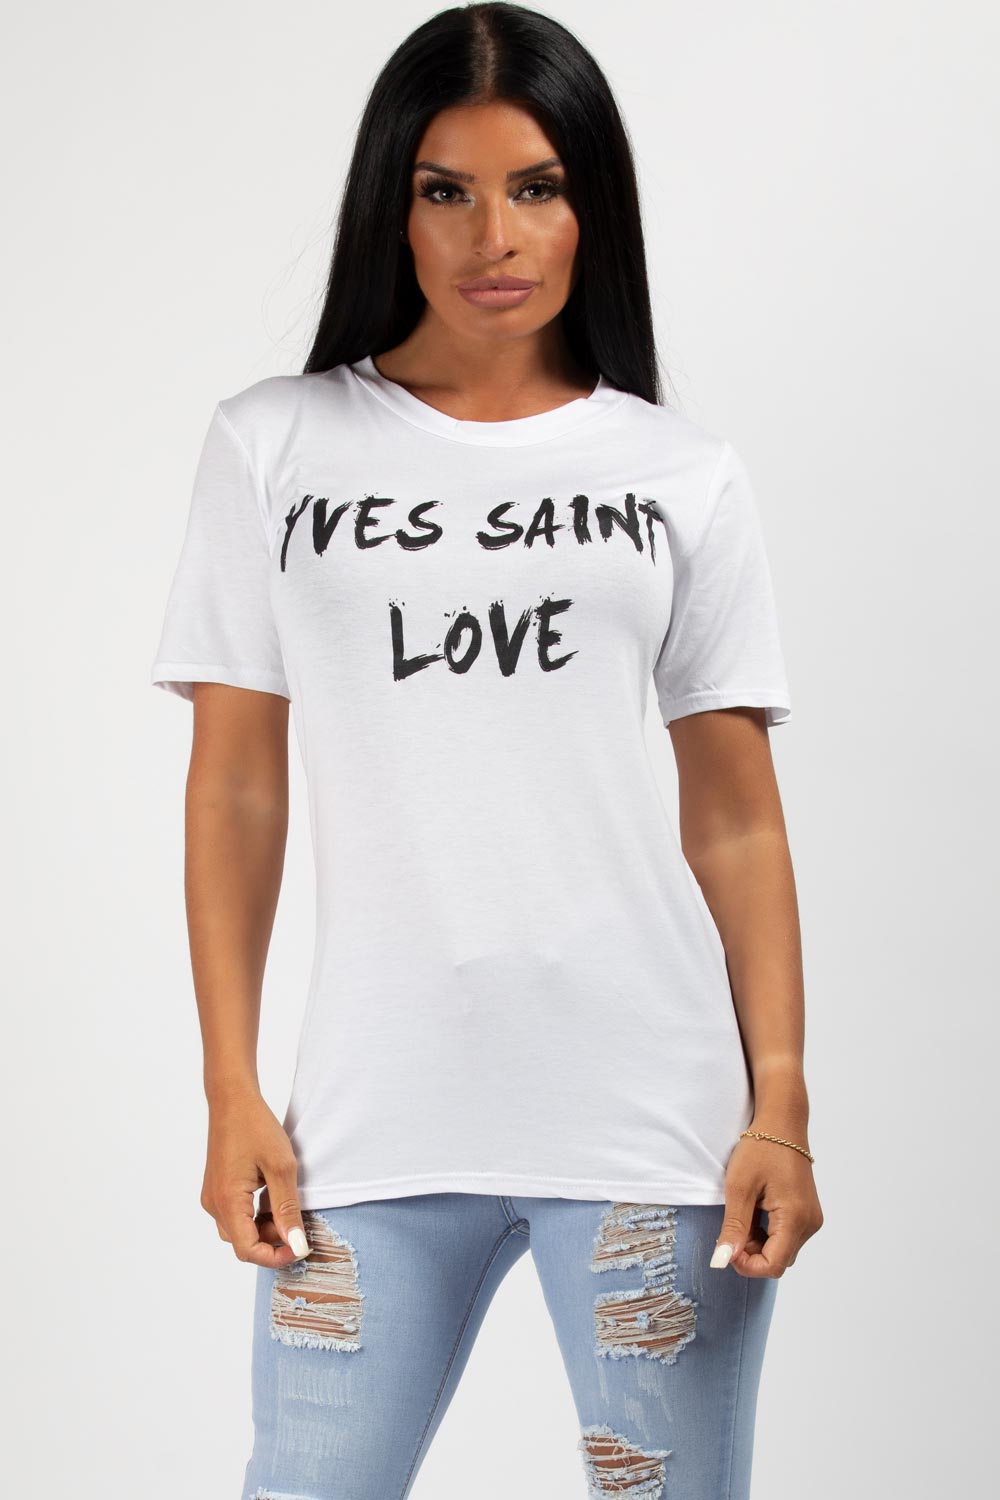 yves saint love top white 